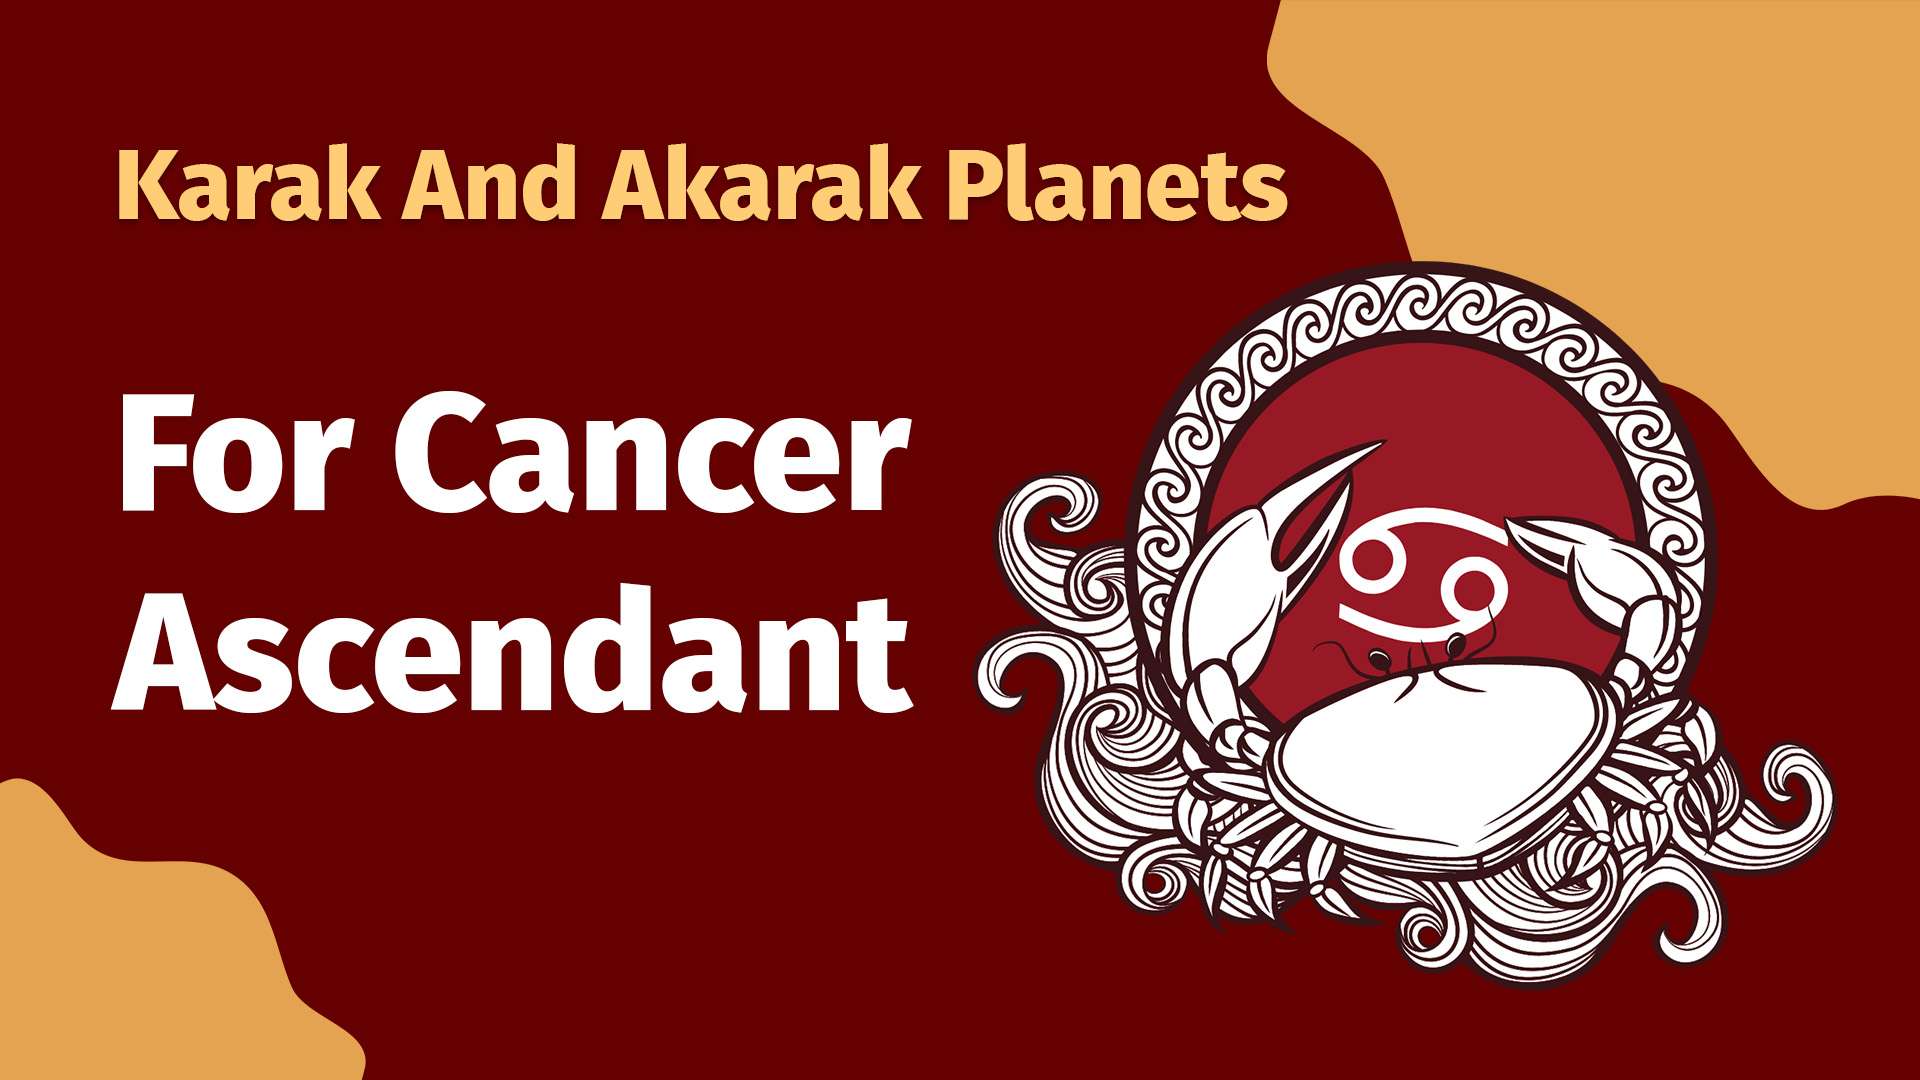 Karak and Akarak Planets for Cancer Ascendants